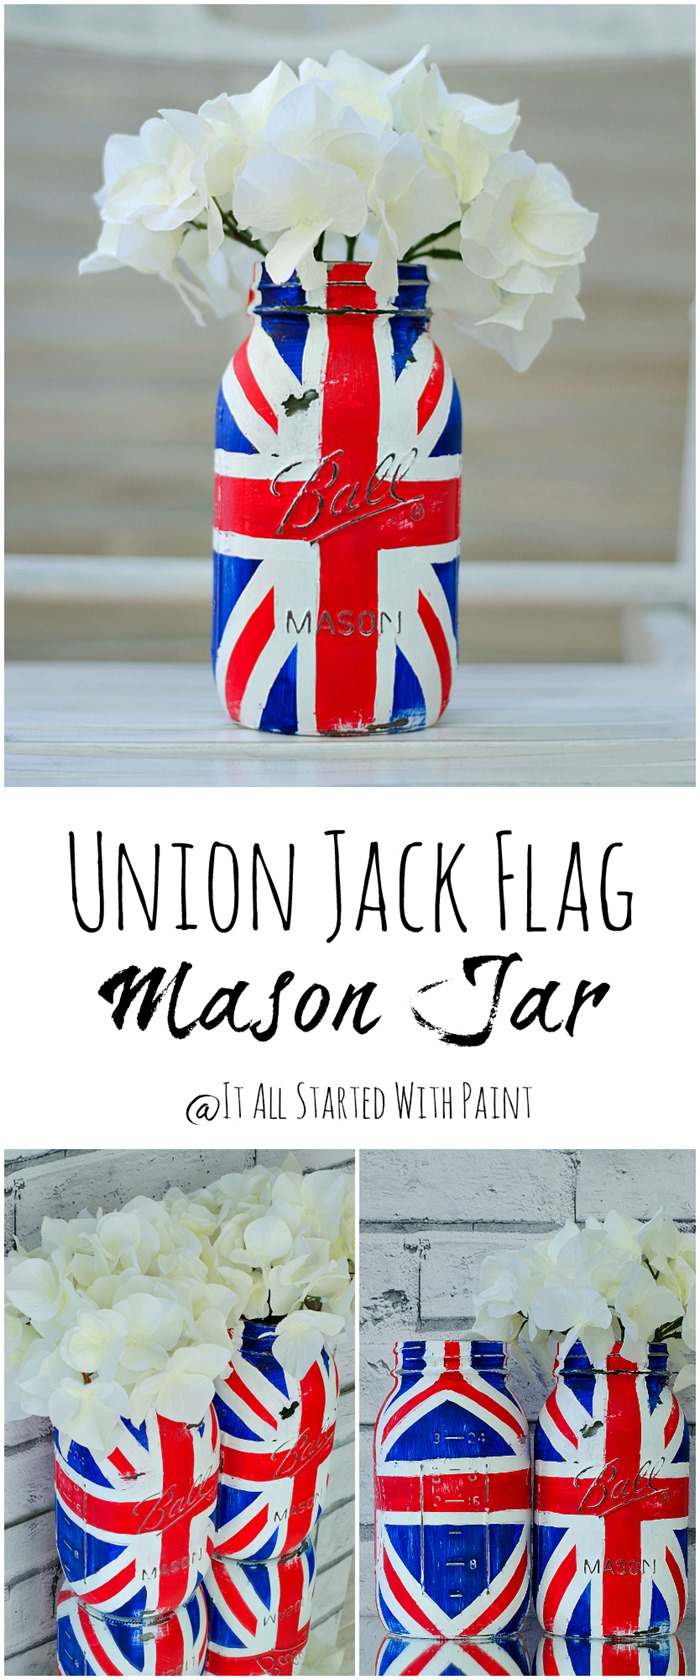 Union-Jack-Flag-Mason-Jar-Painted-Distressed-How-To-Make